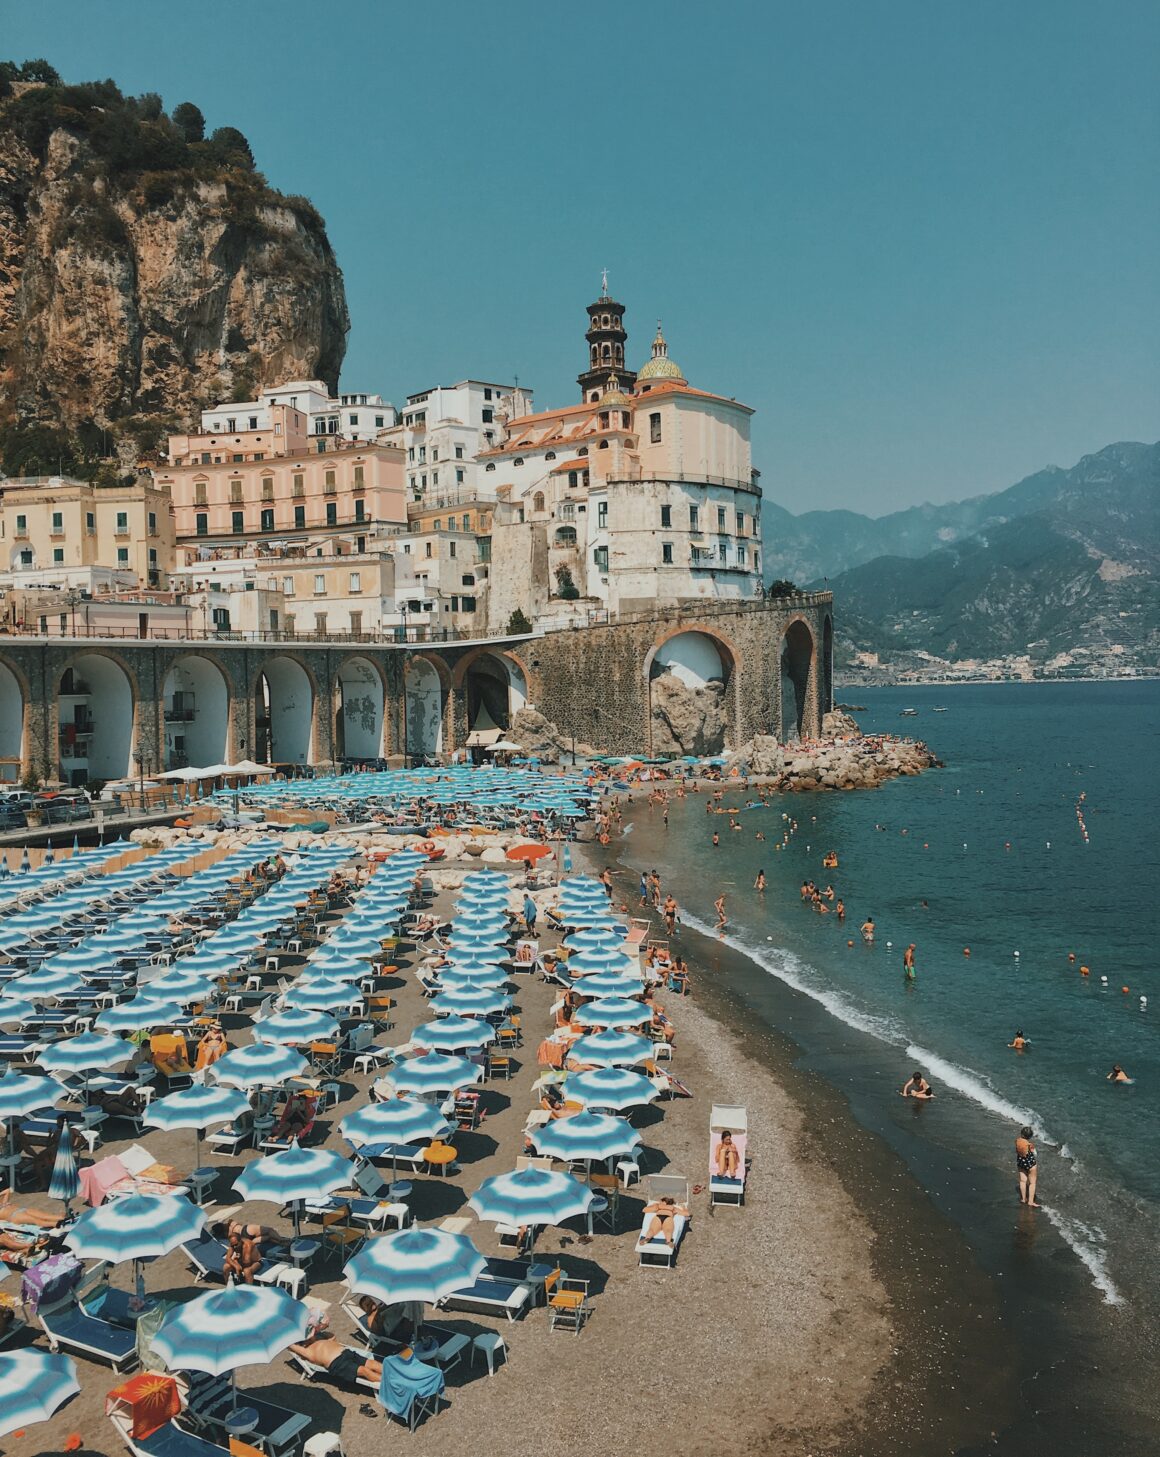 The small town of Atrani, right next to Amalfi on the Amalfi Coast